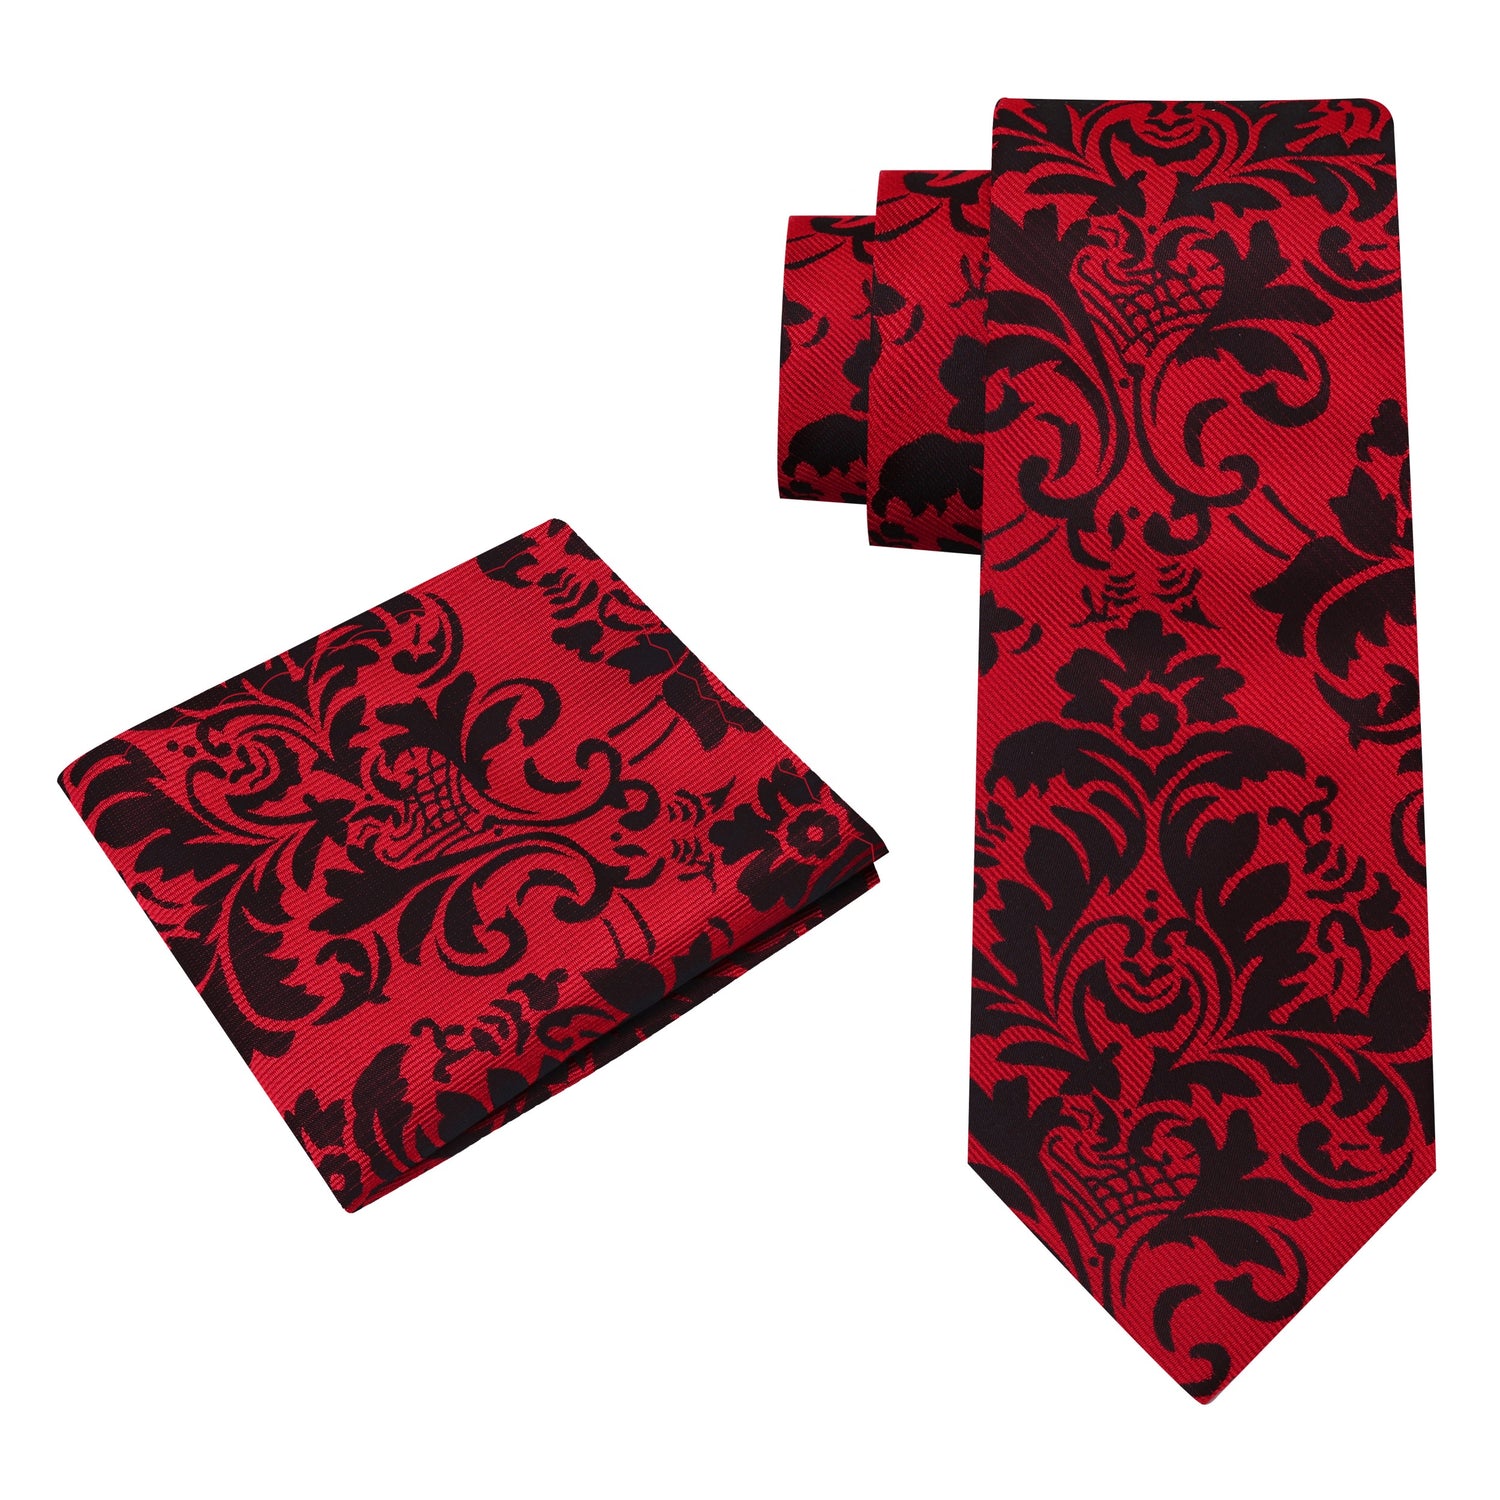 Alt View: A Red, Black Floral Pattern Silk Necktie, Matching Pocket Square